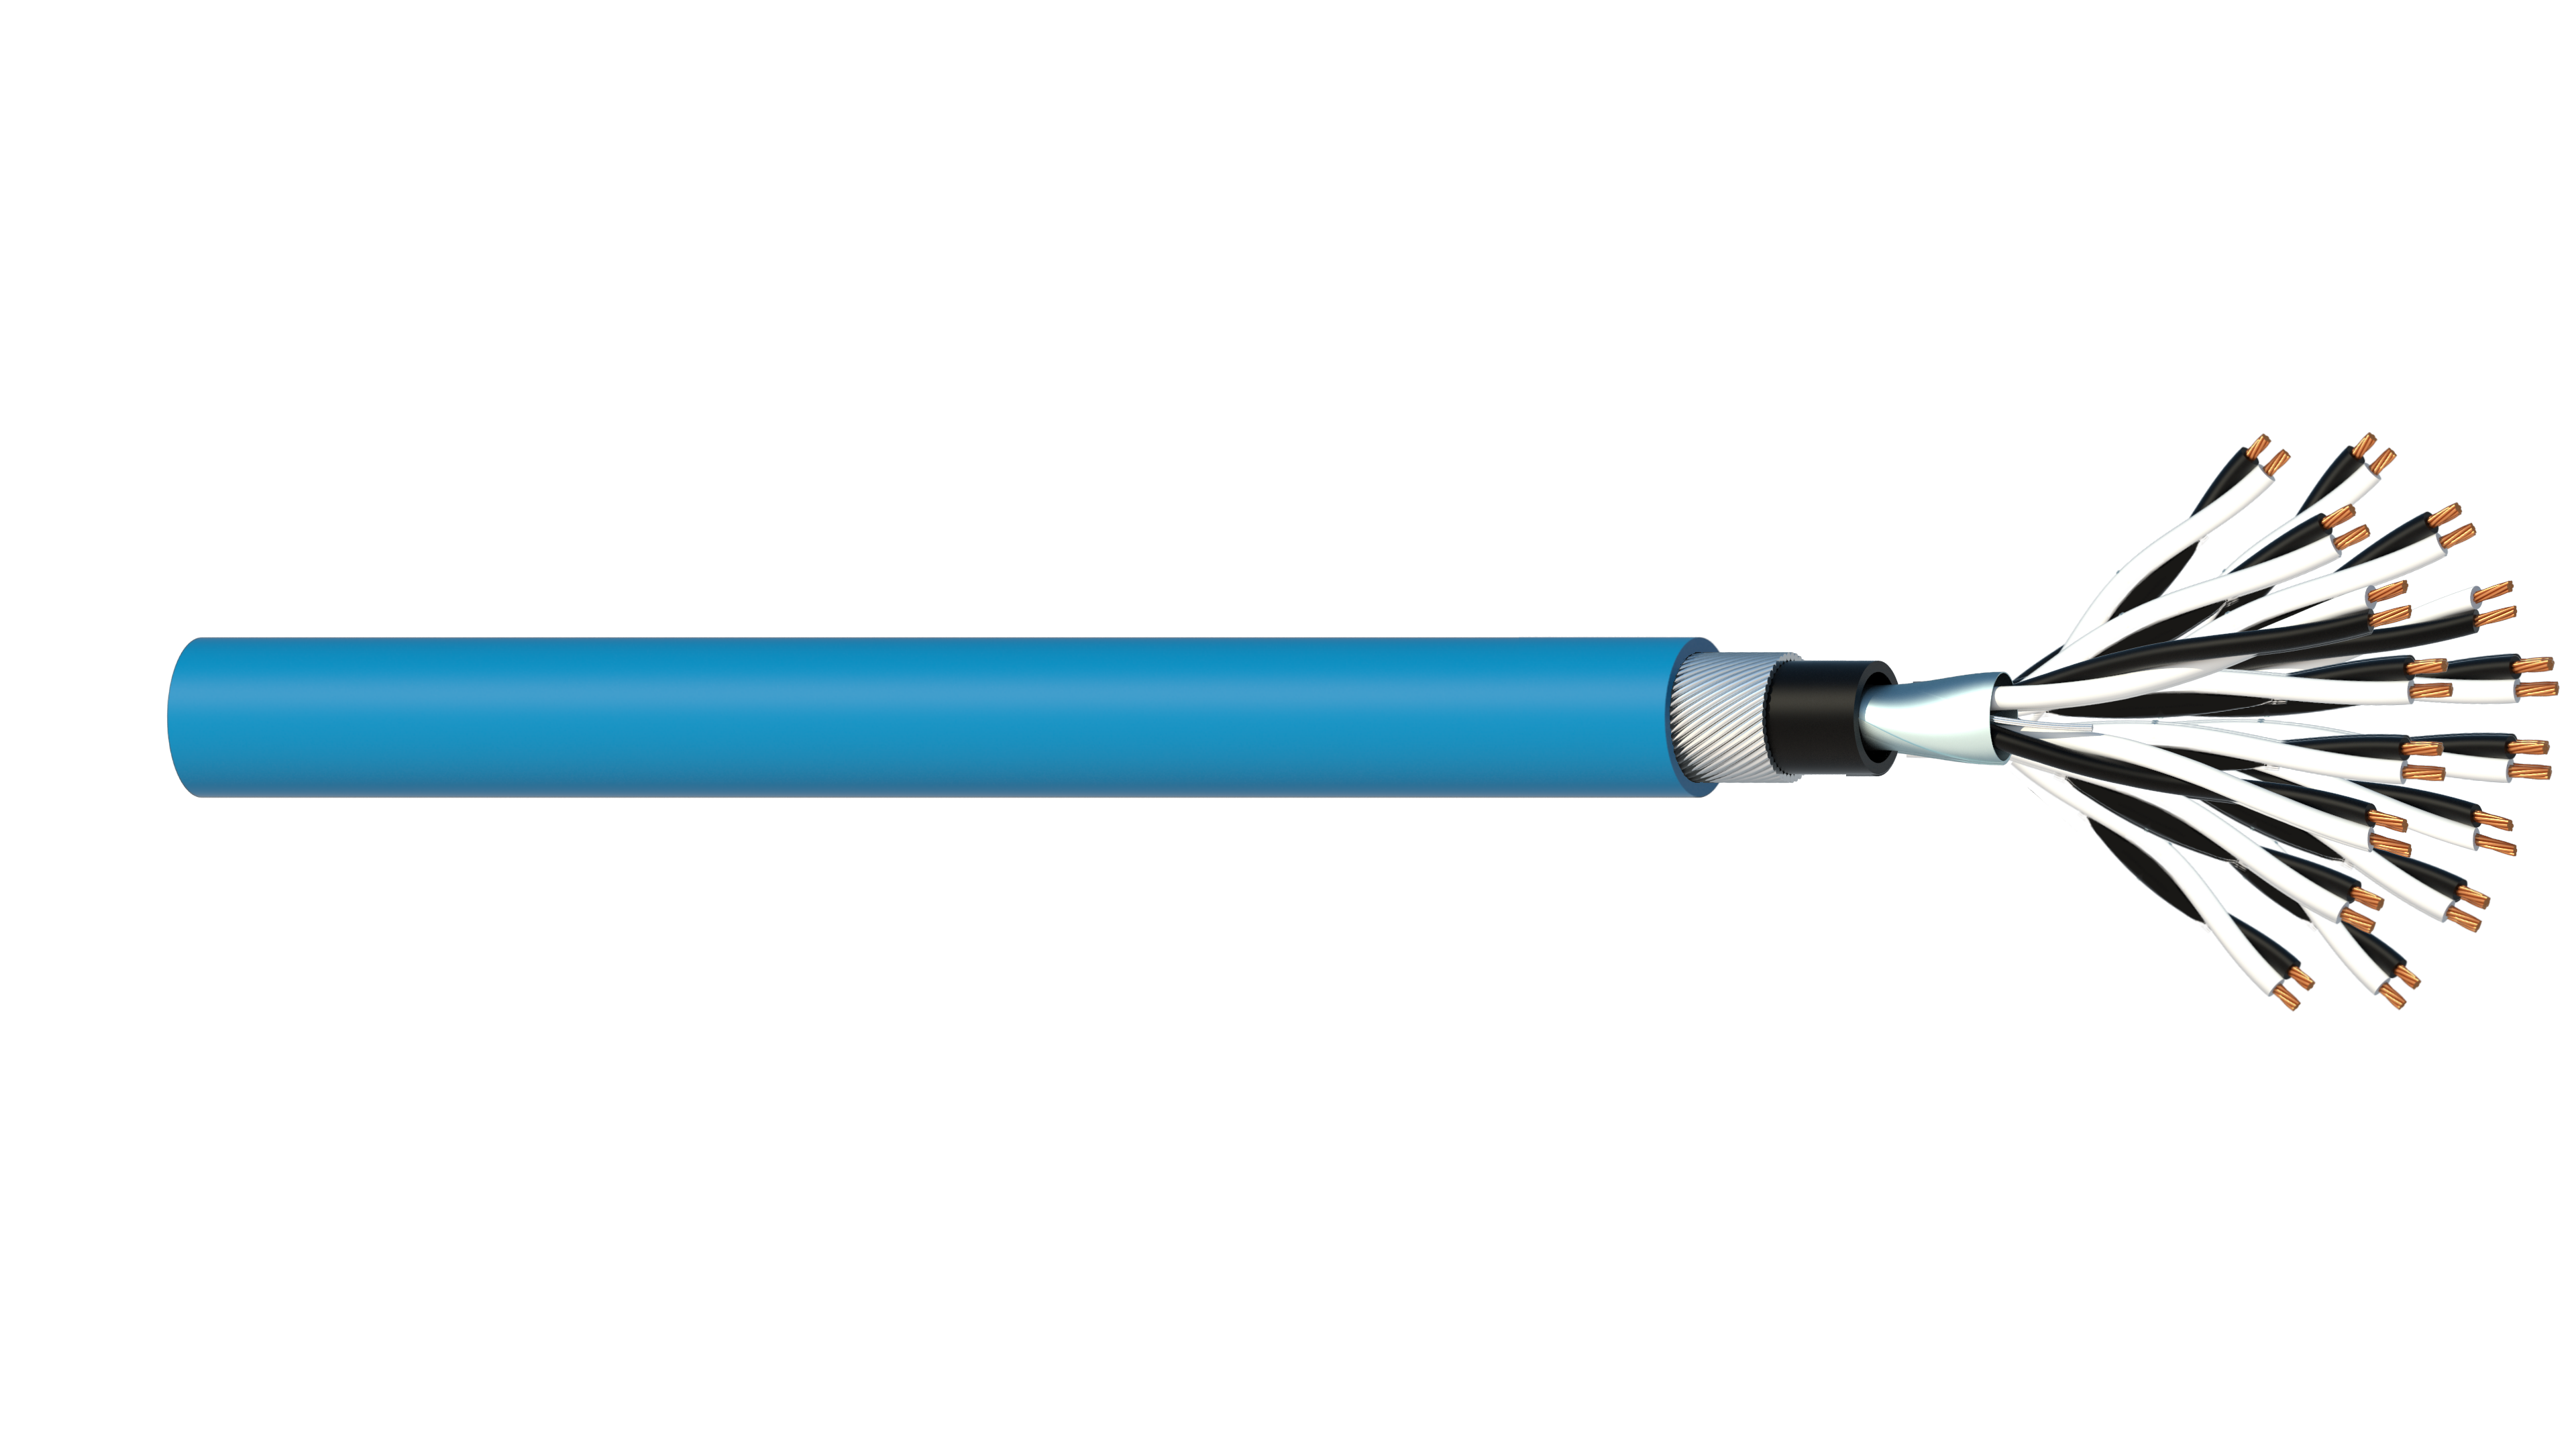 16 Pair 0.5mm2 Cu/PVC/OS/PVC/SWA/PVC Maser Instrumentation Cable - Blue Sheath